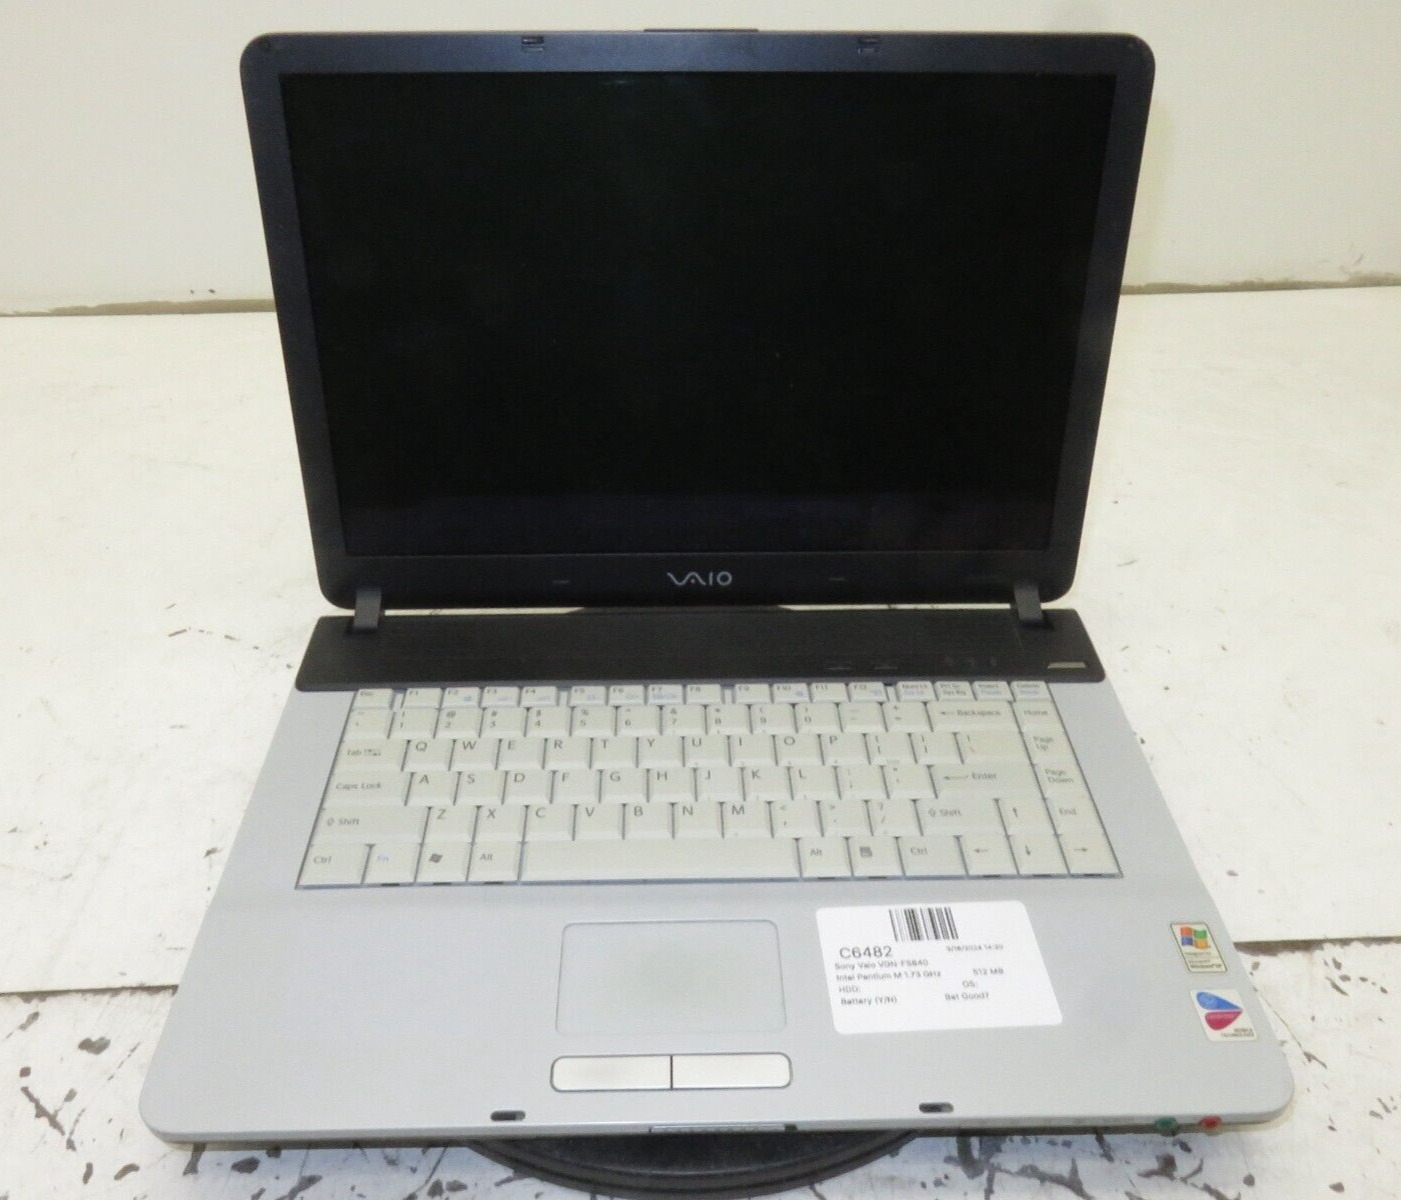 Sony Vaio PCG-7G2L Laptop Intel Pentium M 512MB Ram No HDD or Battery